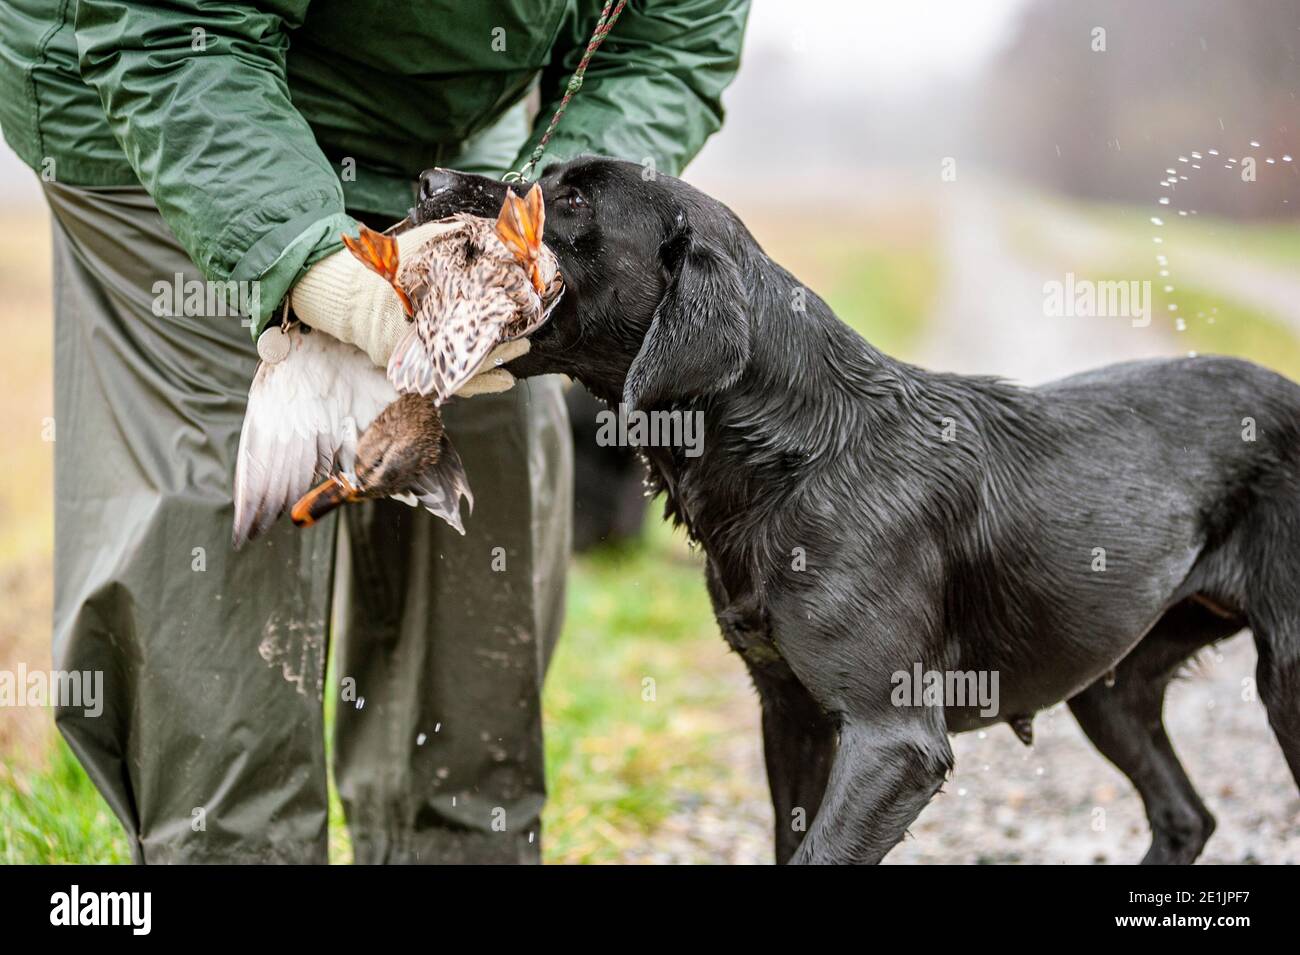 are labrador retrievers bird dogs